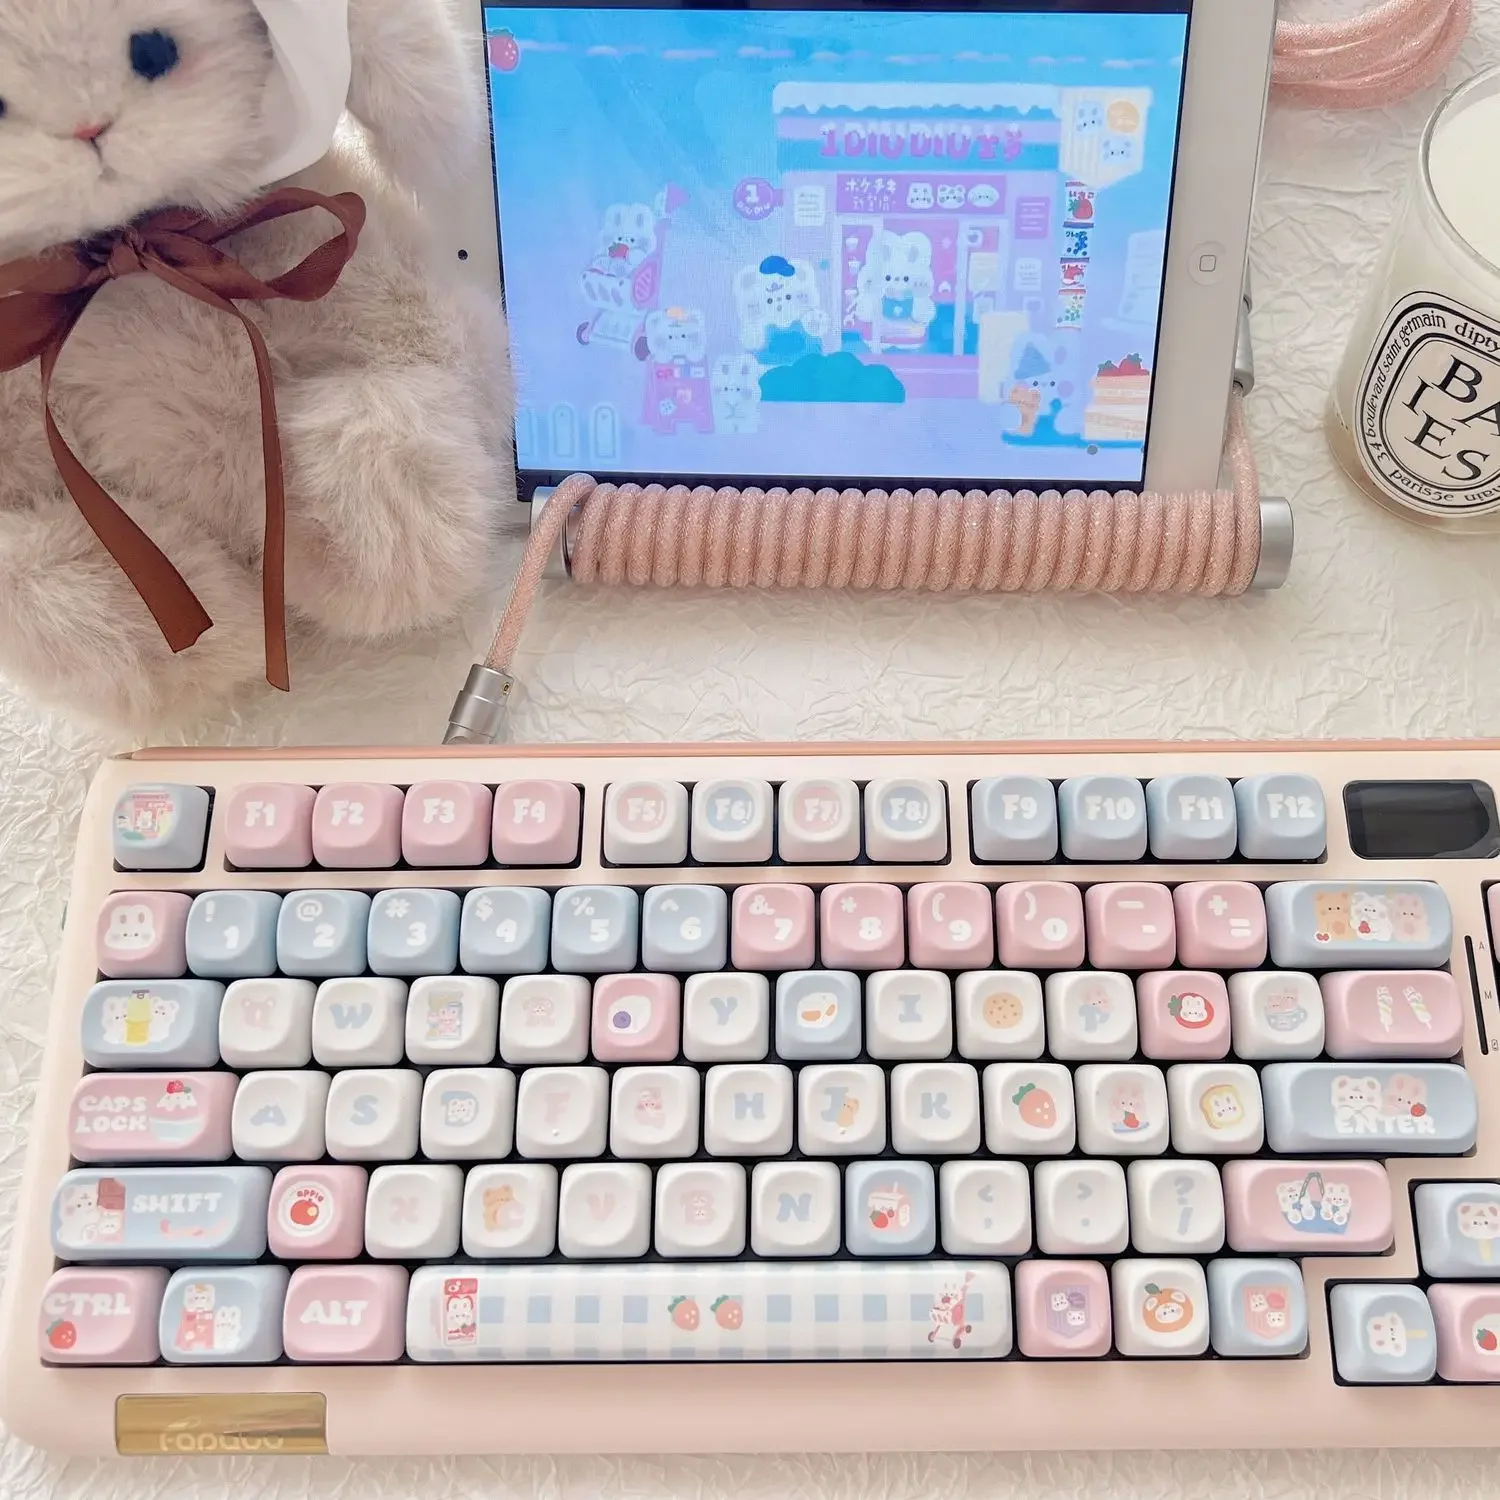 custom-keycaps-142-tasti-moa-keycaps-cute-rabbit-and-bear-key-caps-per-tastiera-meccanica-pink-keycap-for-girls-gift-keycap-set